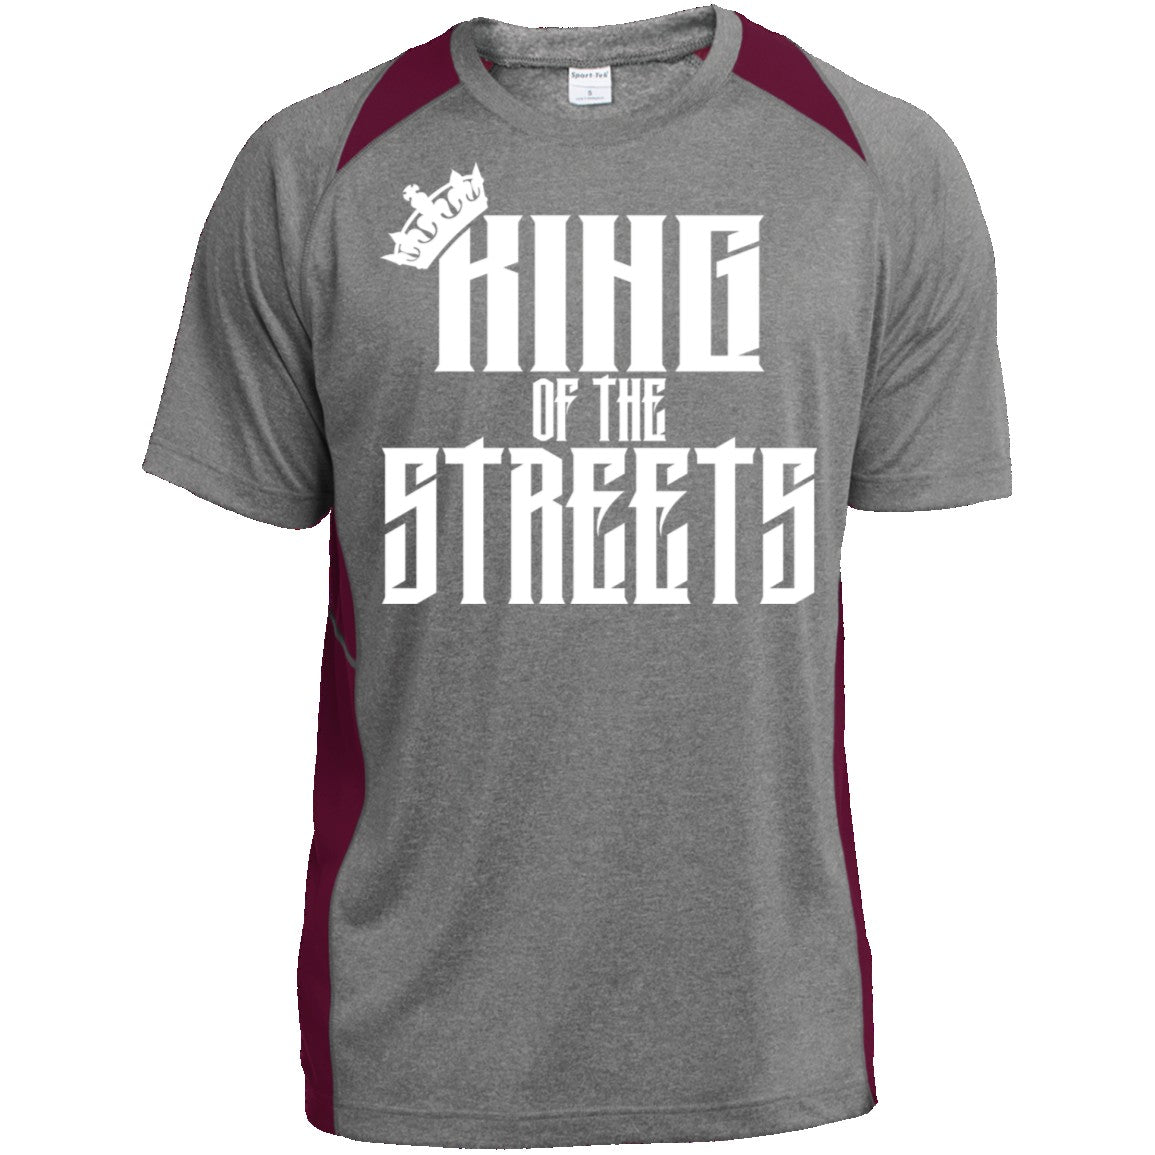 King of the Streets Heather Colorblock Poly T-Shirt freeshipping - Bedroka Streetwear LLC